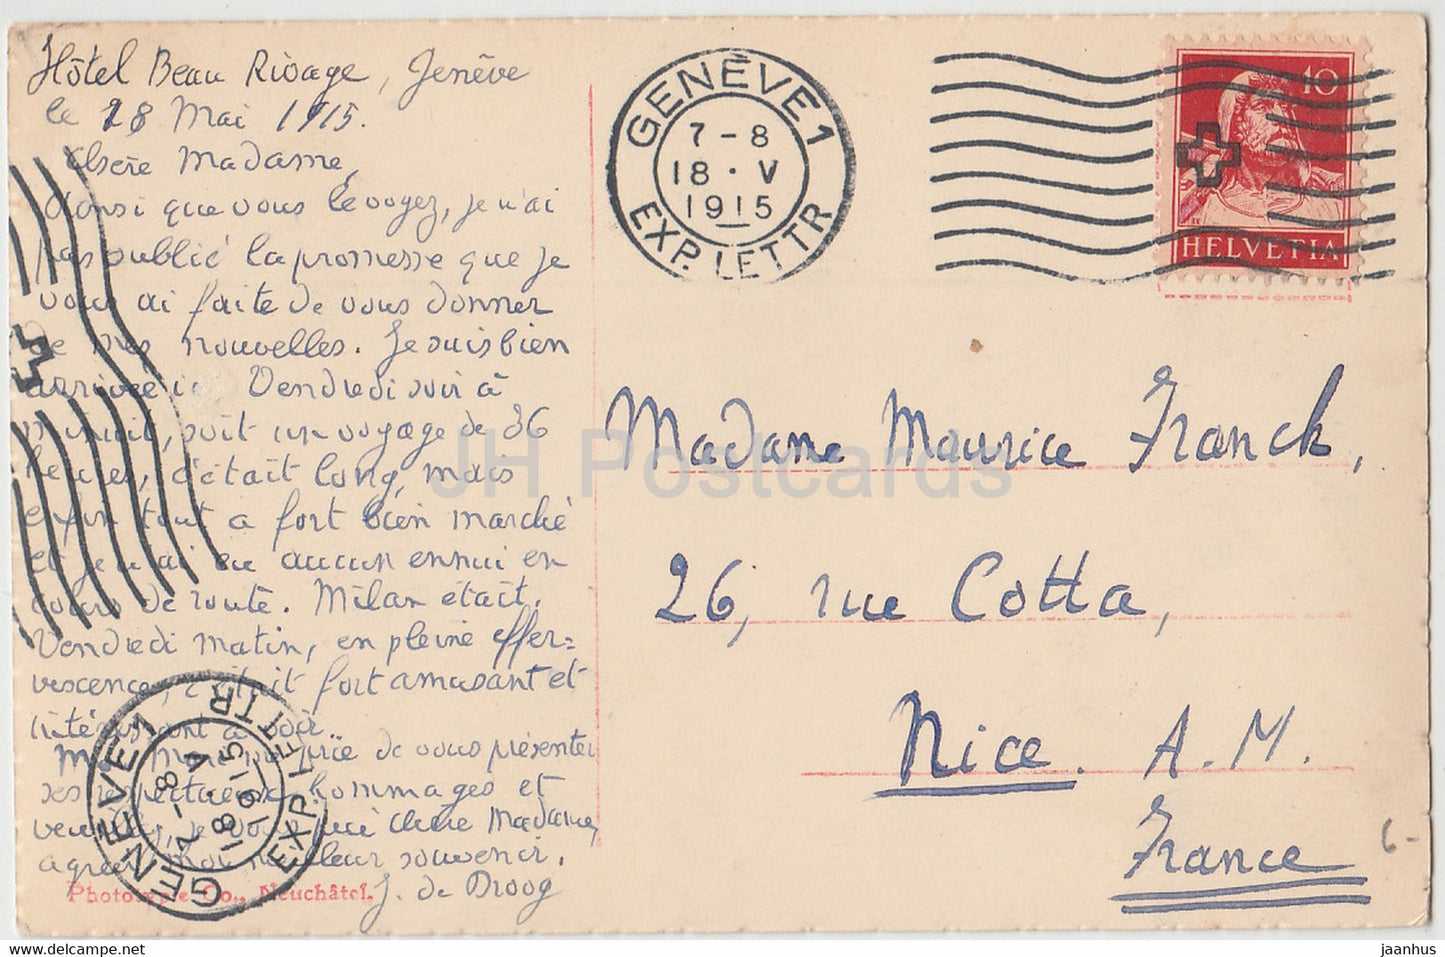 Geneve - Genf - Ponts et Ile JJ Rousseau - 6565 - alte Postkarte - 1915 - Schweiz - gebraucht